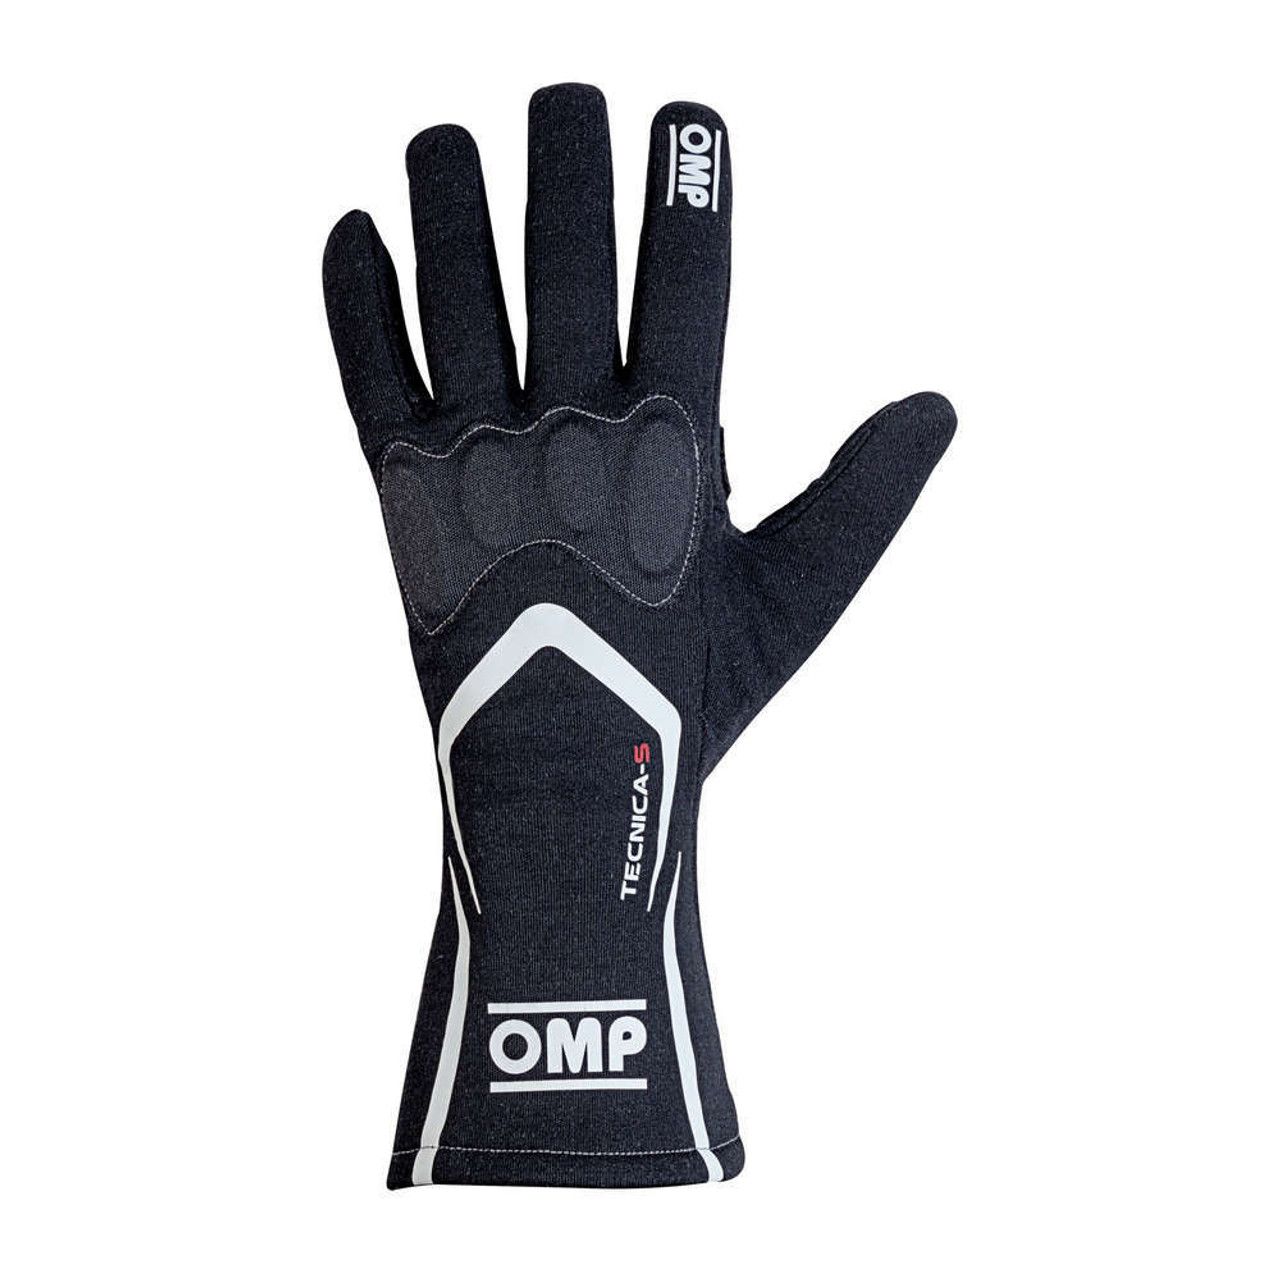 TECNICA-S Gloves Black Lg OMPIB764NL